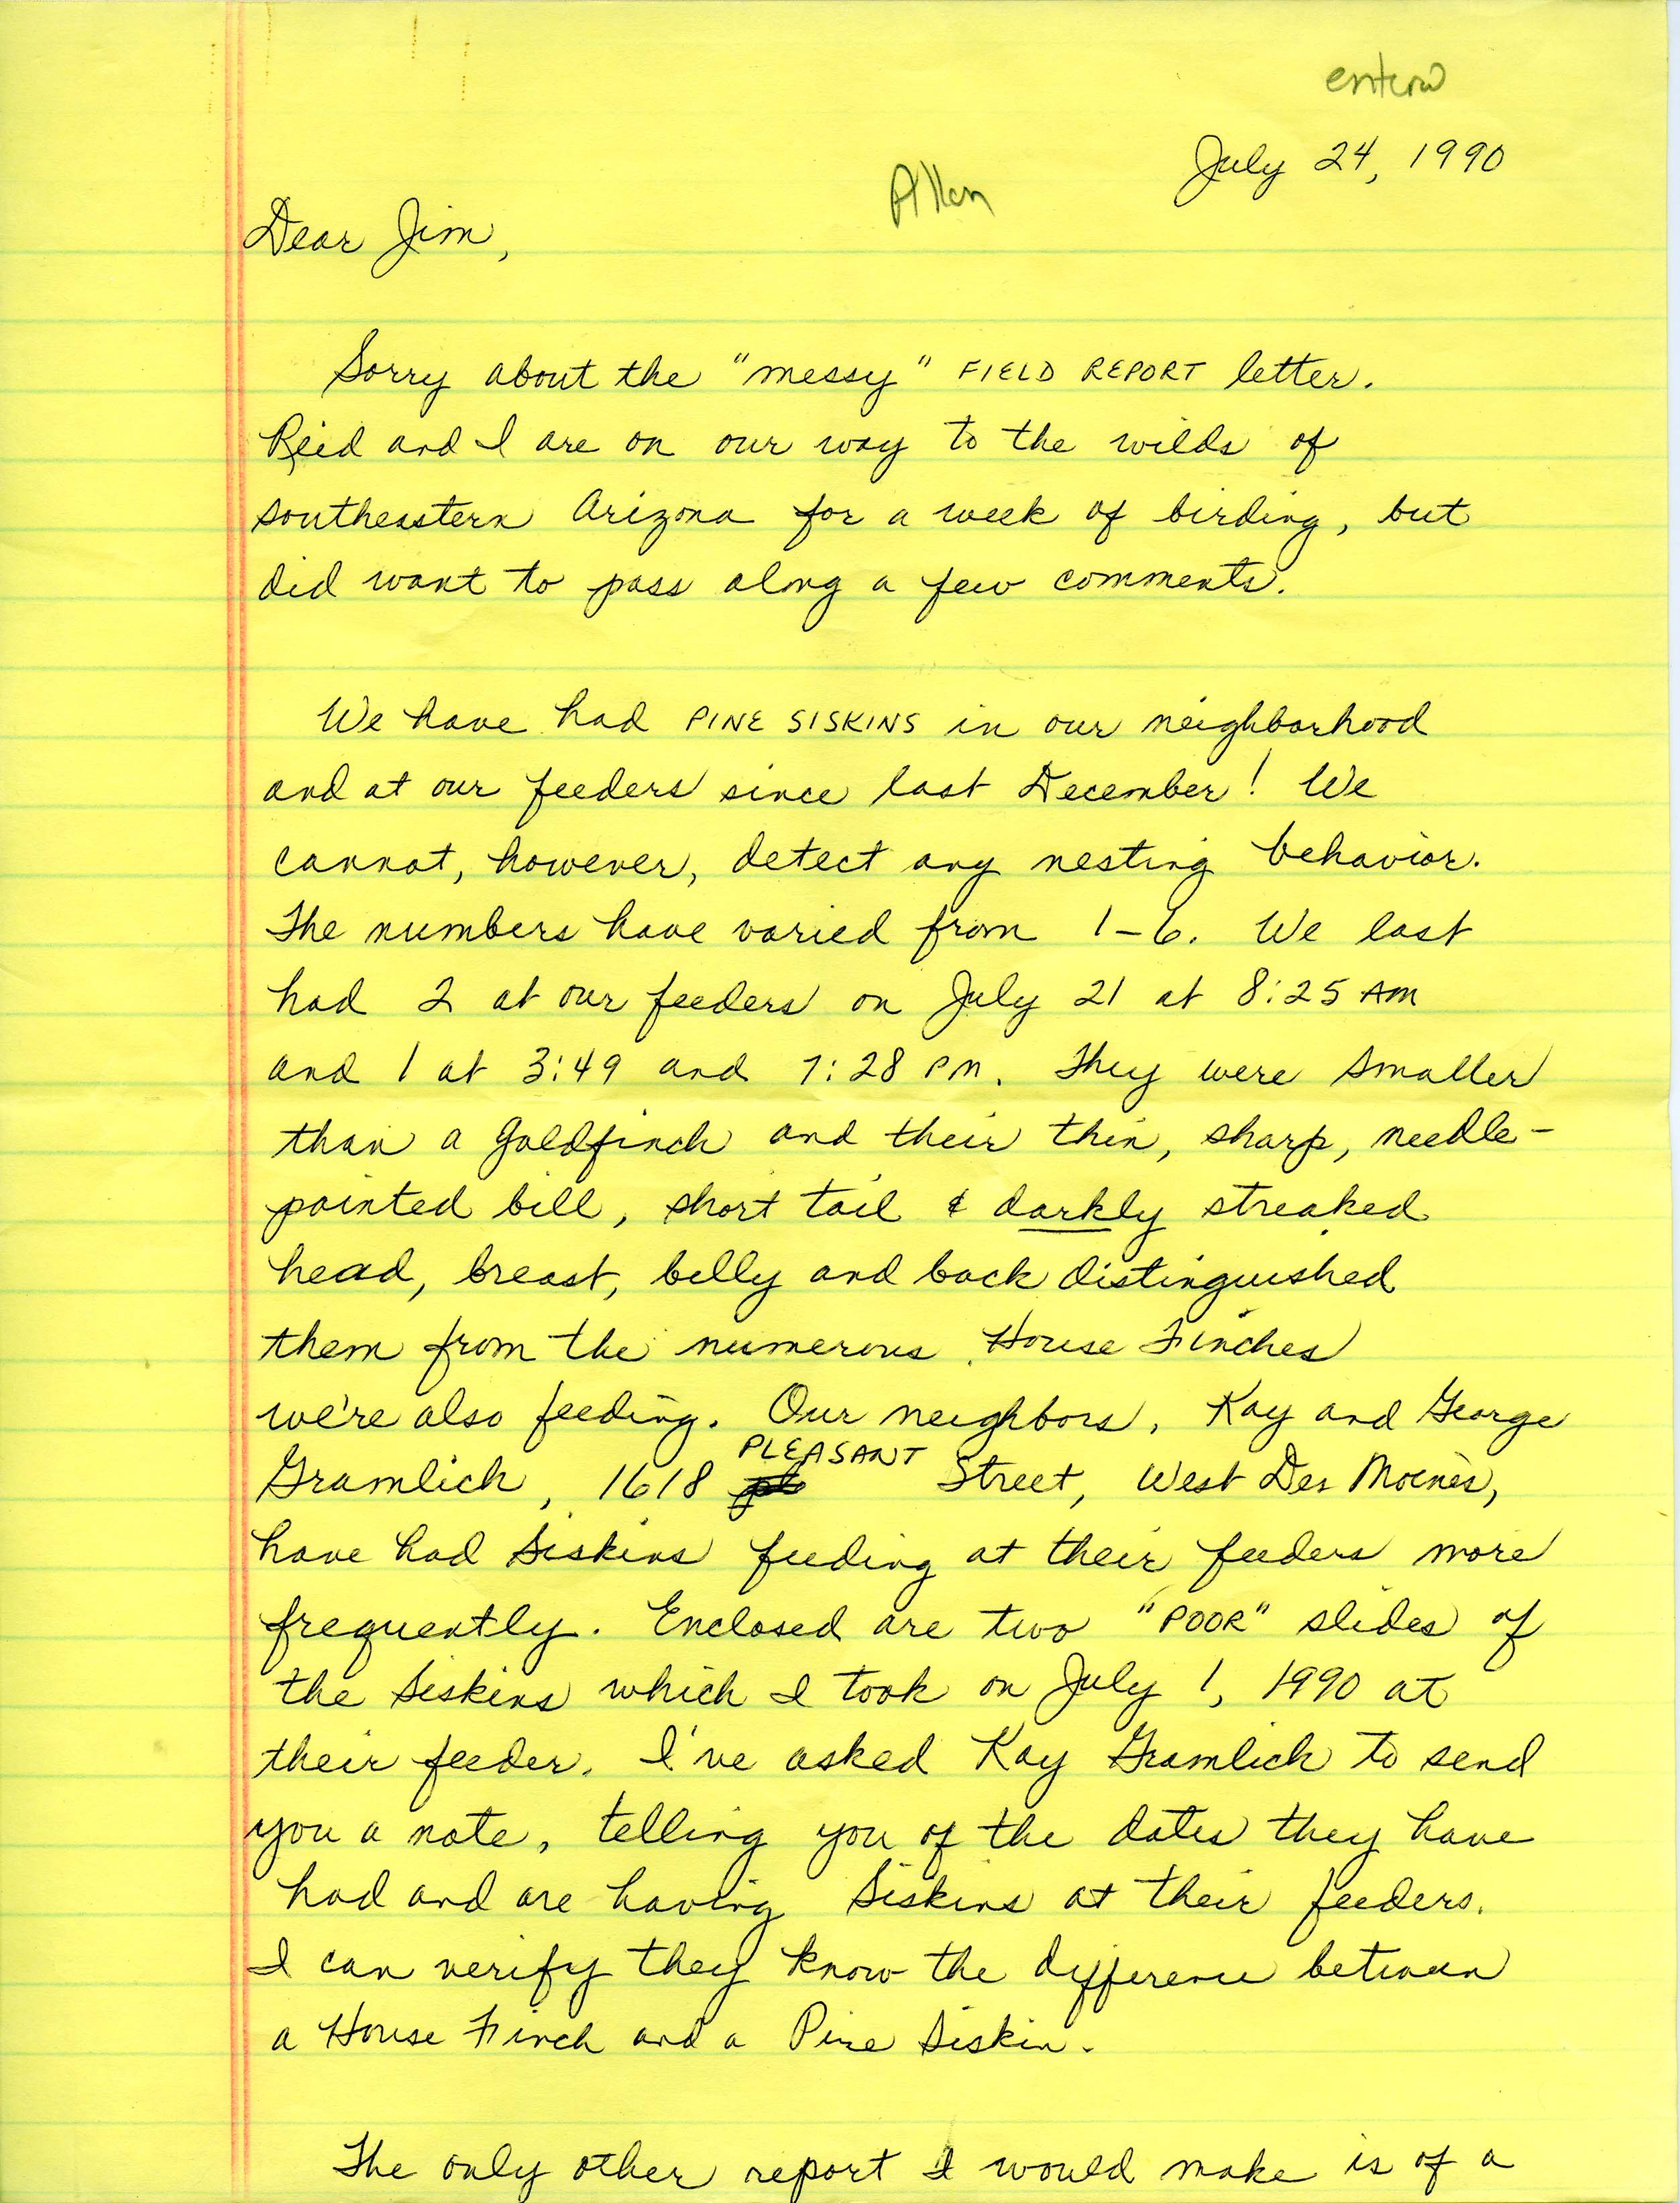 Pam and Reid Allen letter to Jim Dinsmore regarding bird sightings for IOU quarterly field report for summer 1990, July 24, 1990